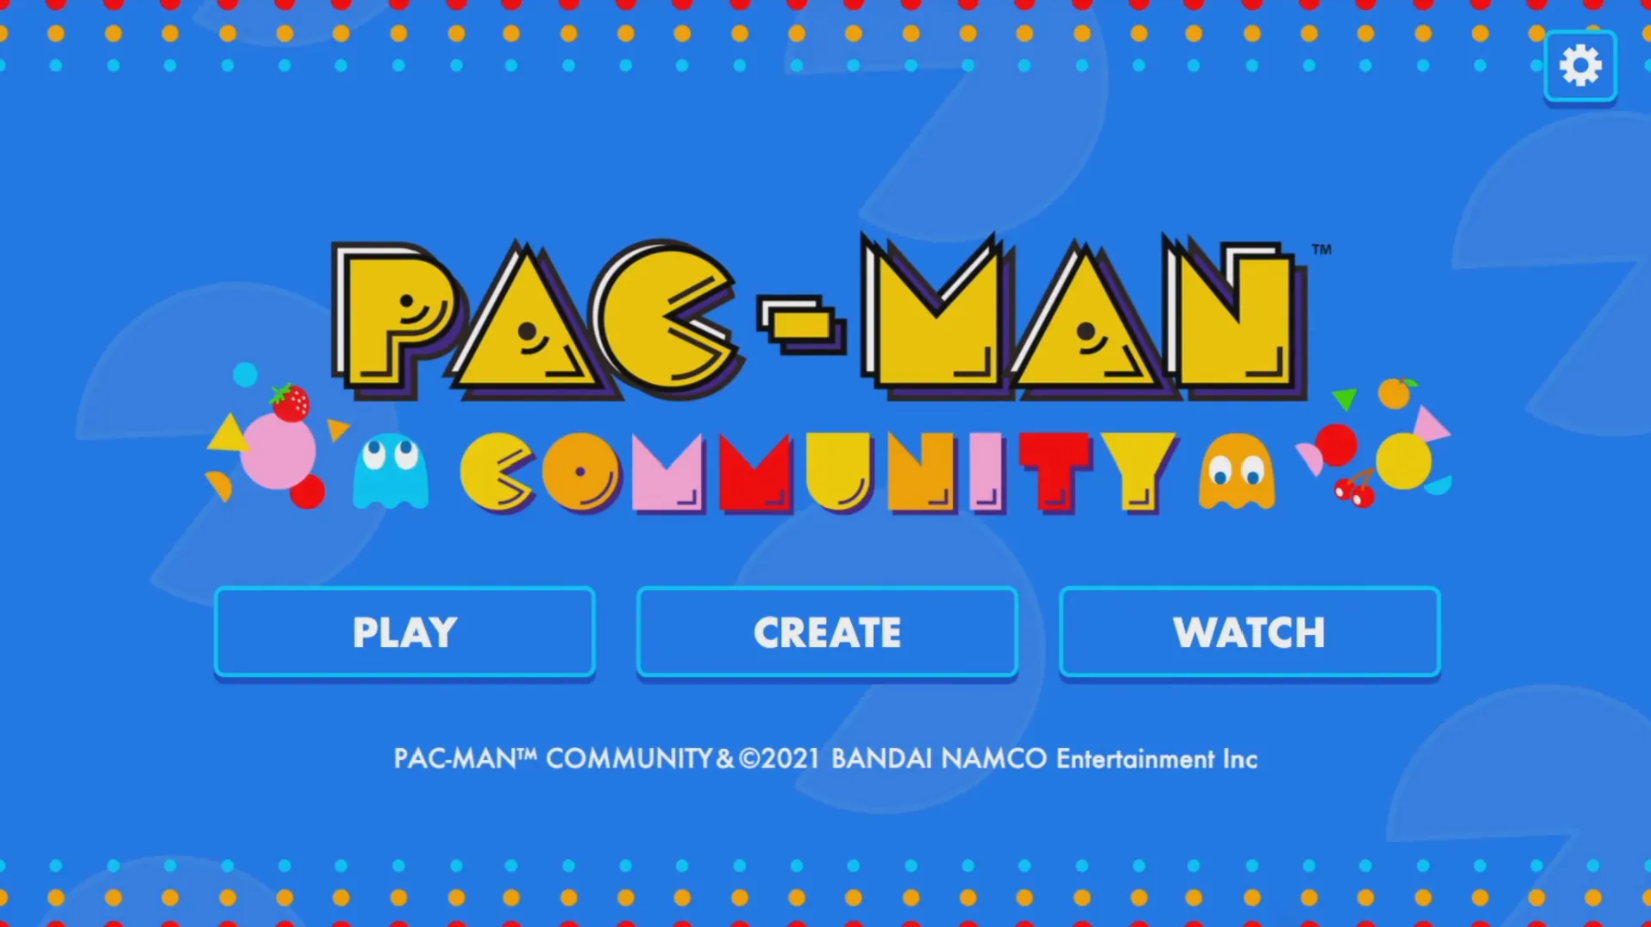 PAC-MAN COMMUNITY facebook gaming